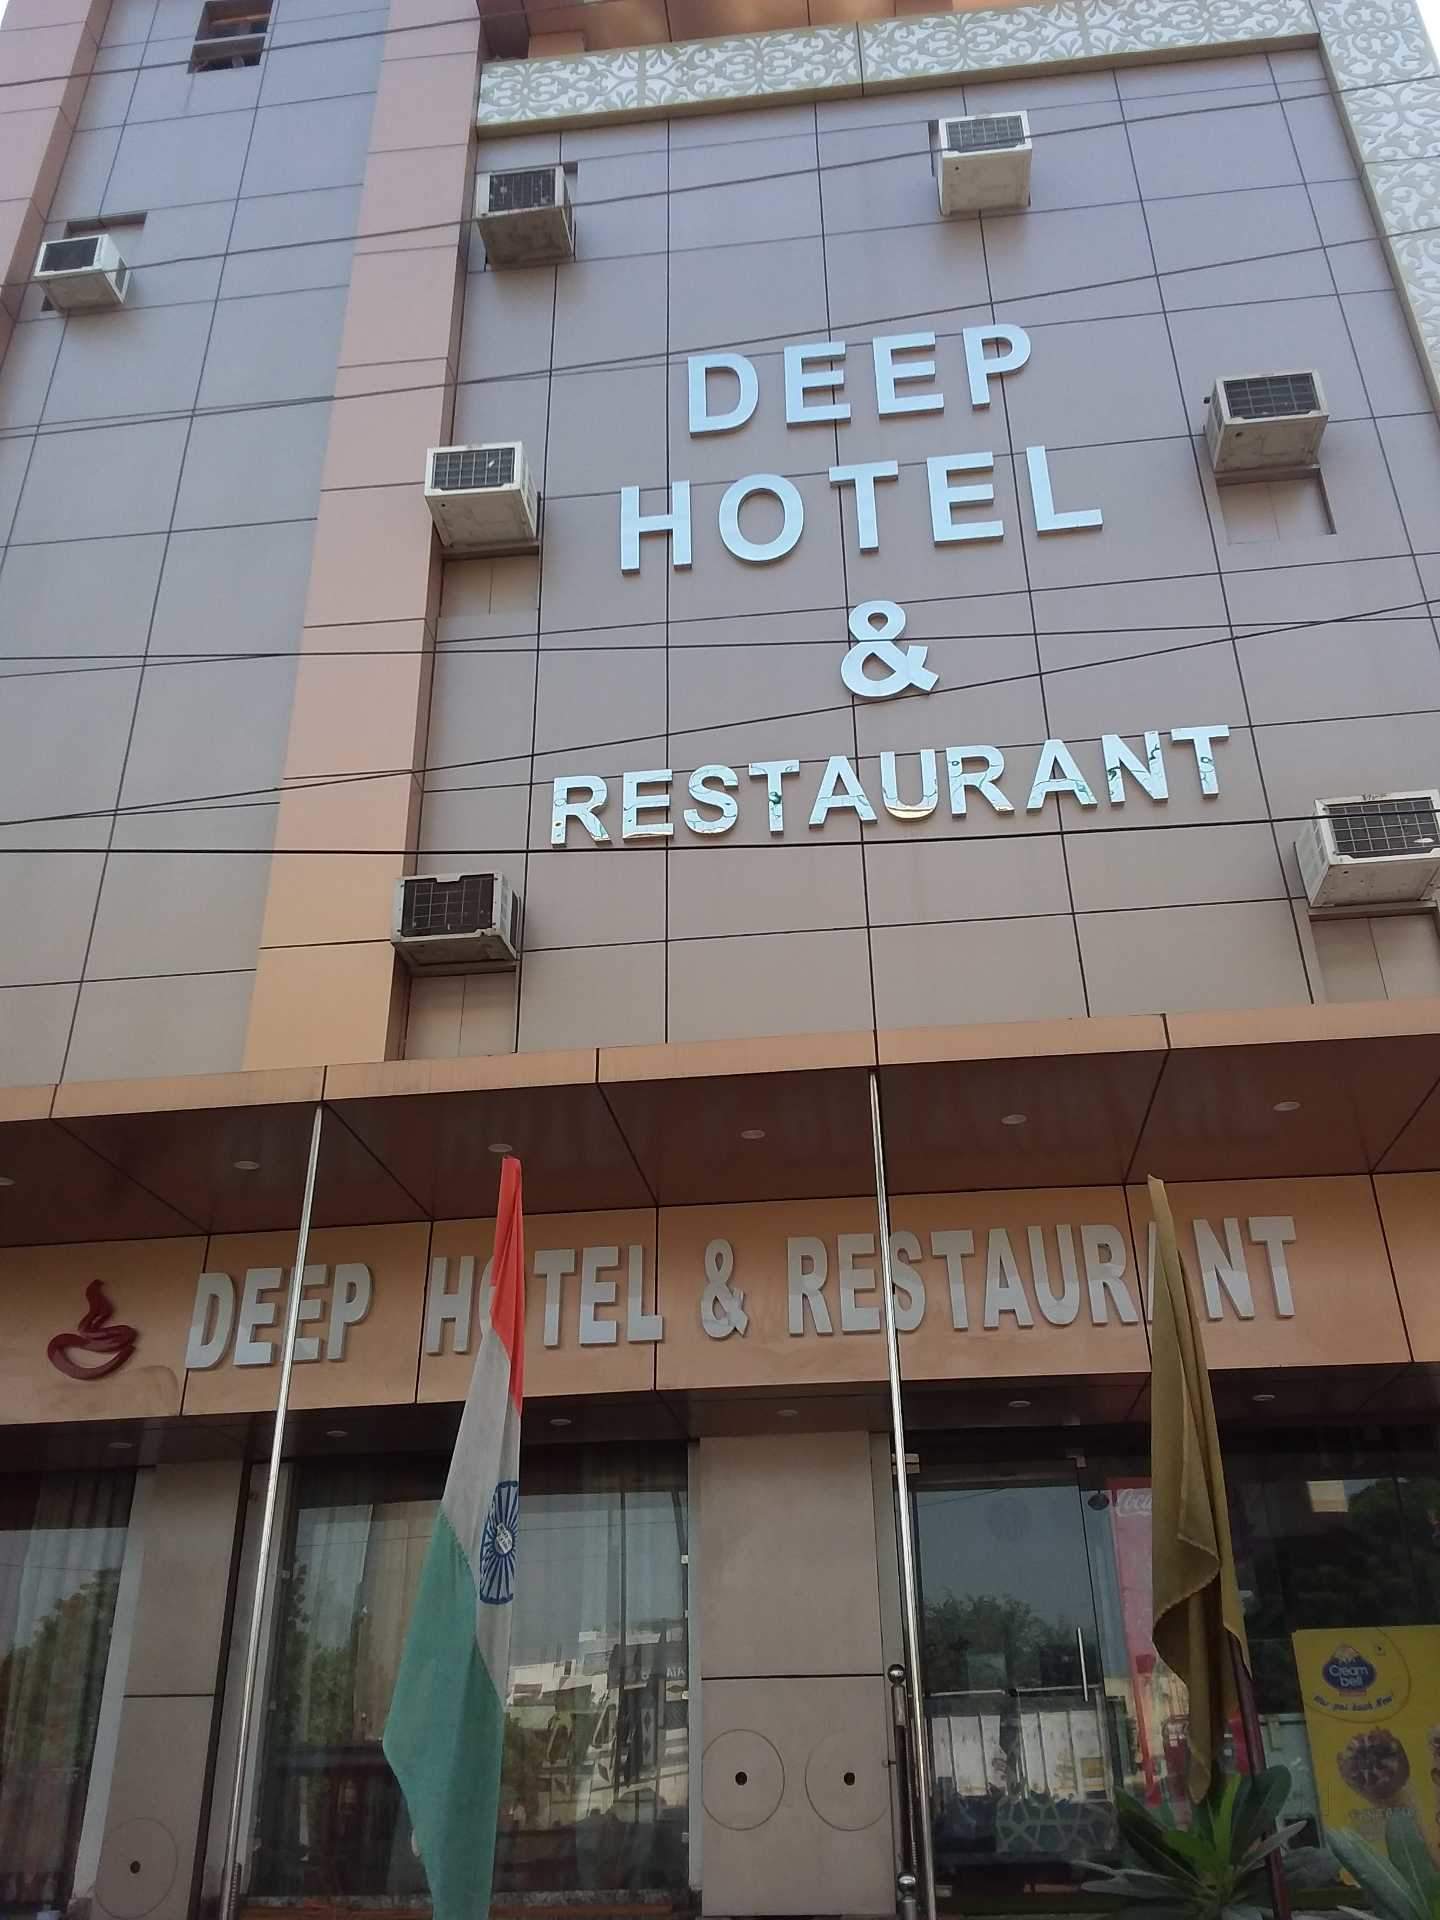 Deep Hotel & Restaurant|Resort|Accomodation